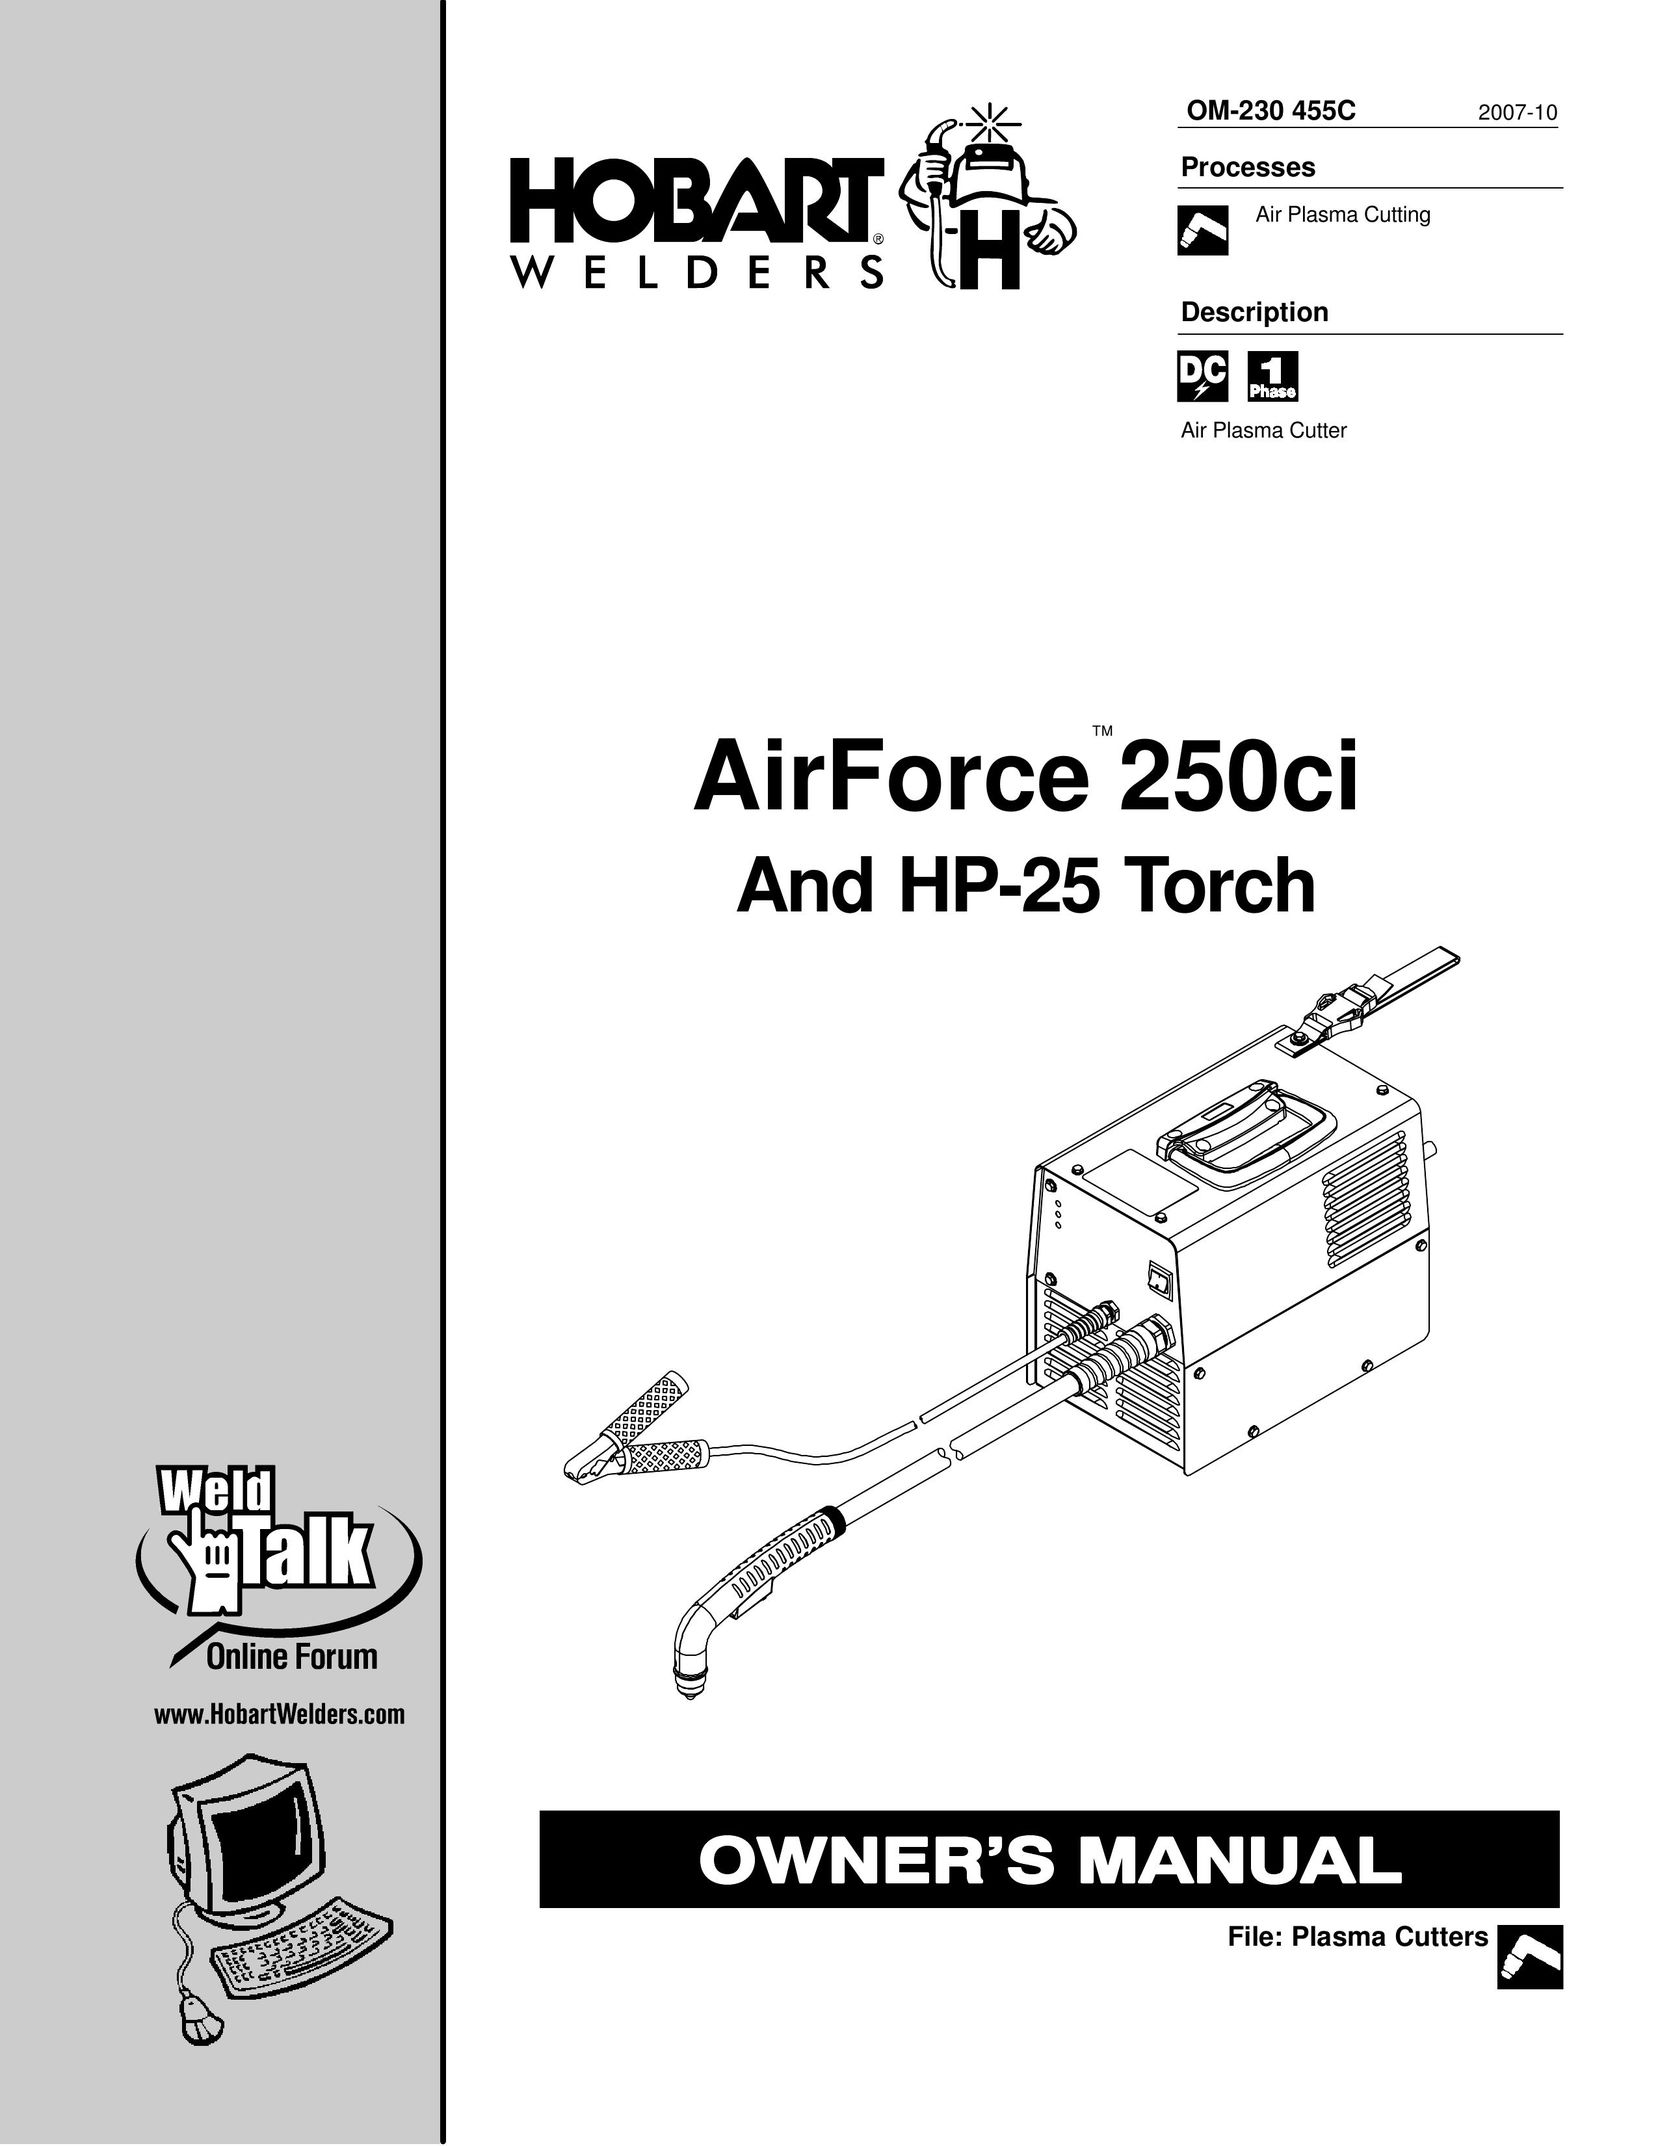 Hobart Welding Products HP-25 TORCH Welder User Manual